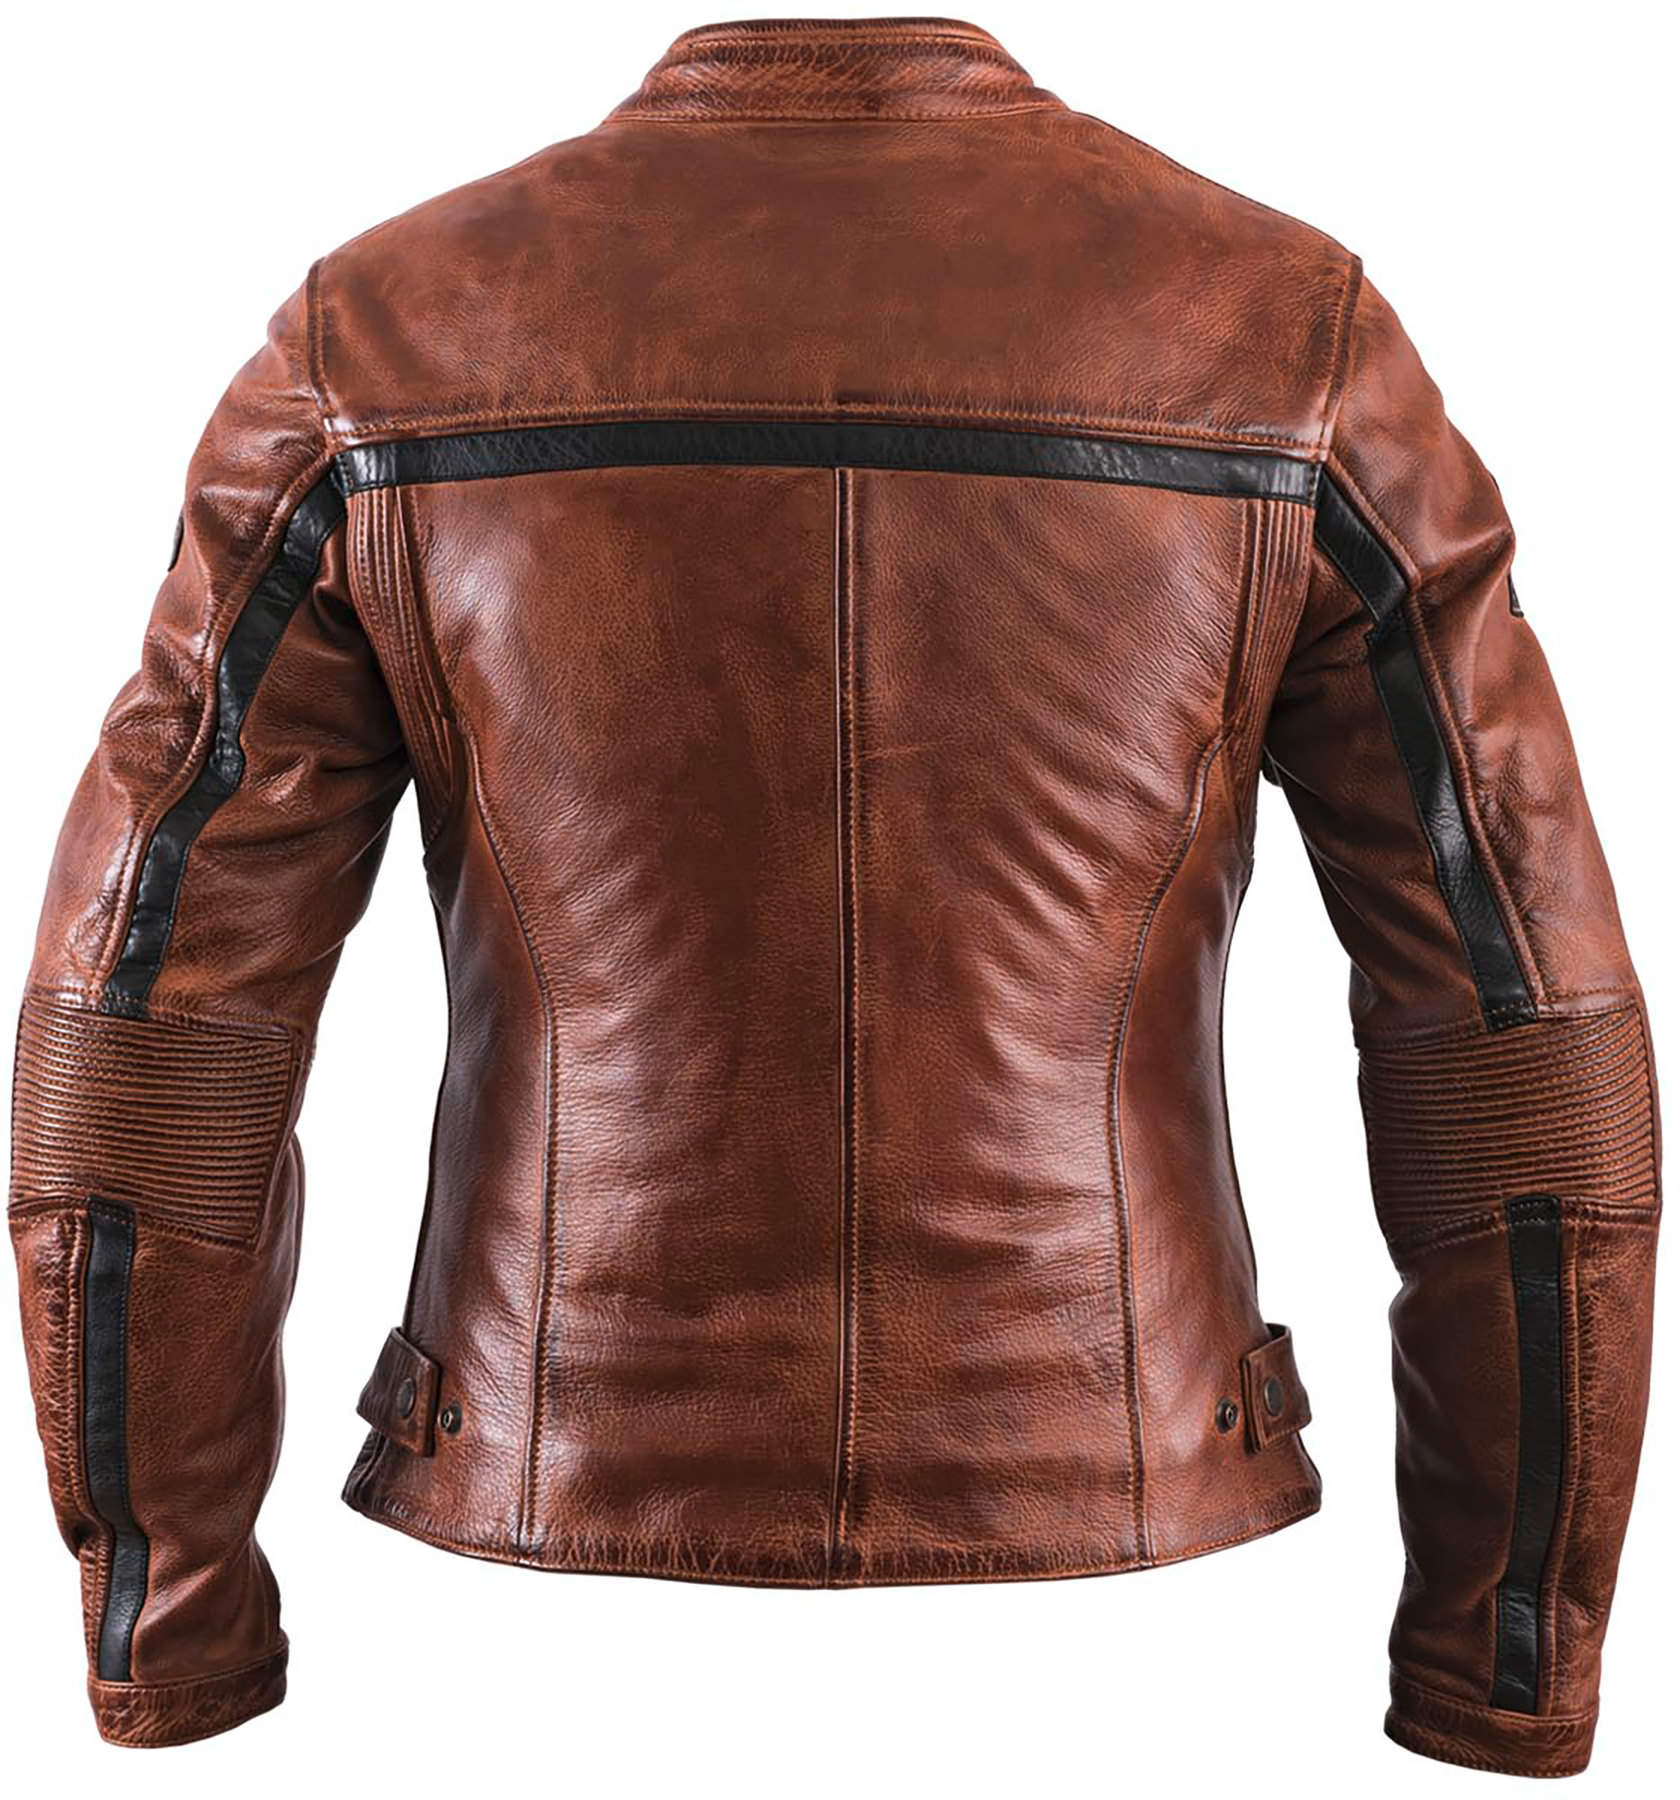 Buy Helstons Daytona Rag leather jacket | Louis motorcycle clothing and technology